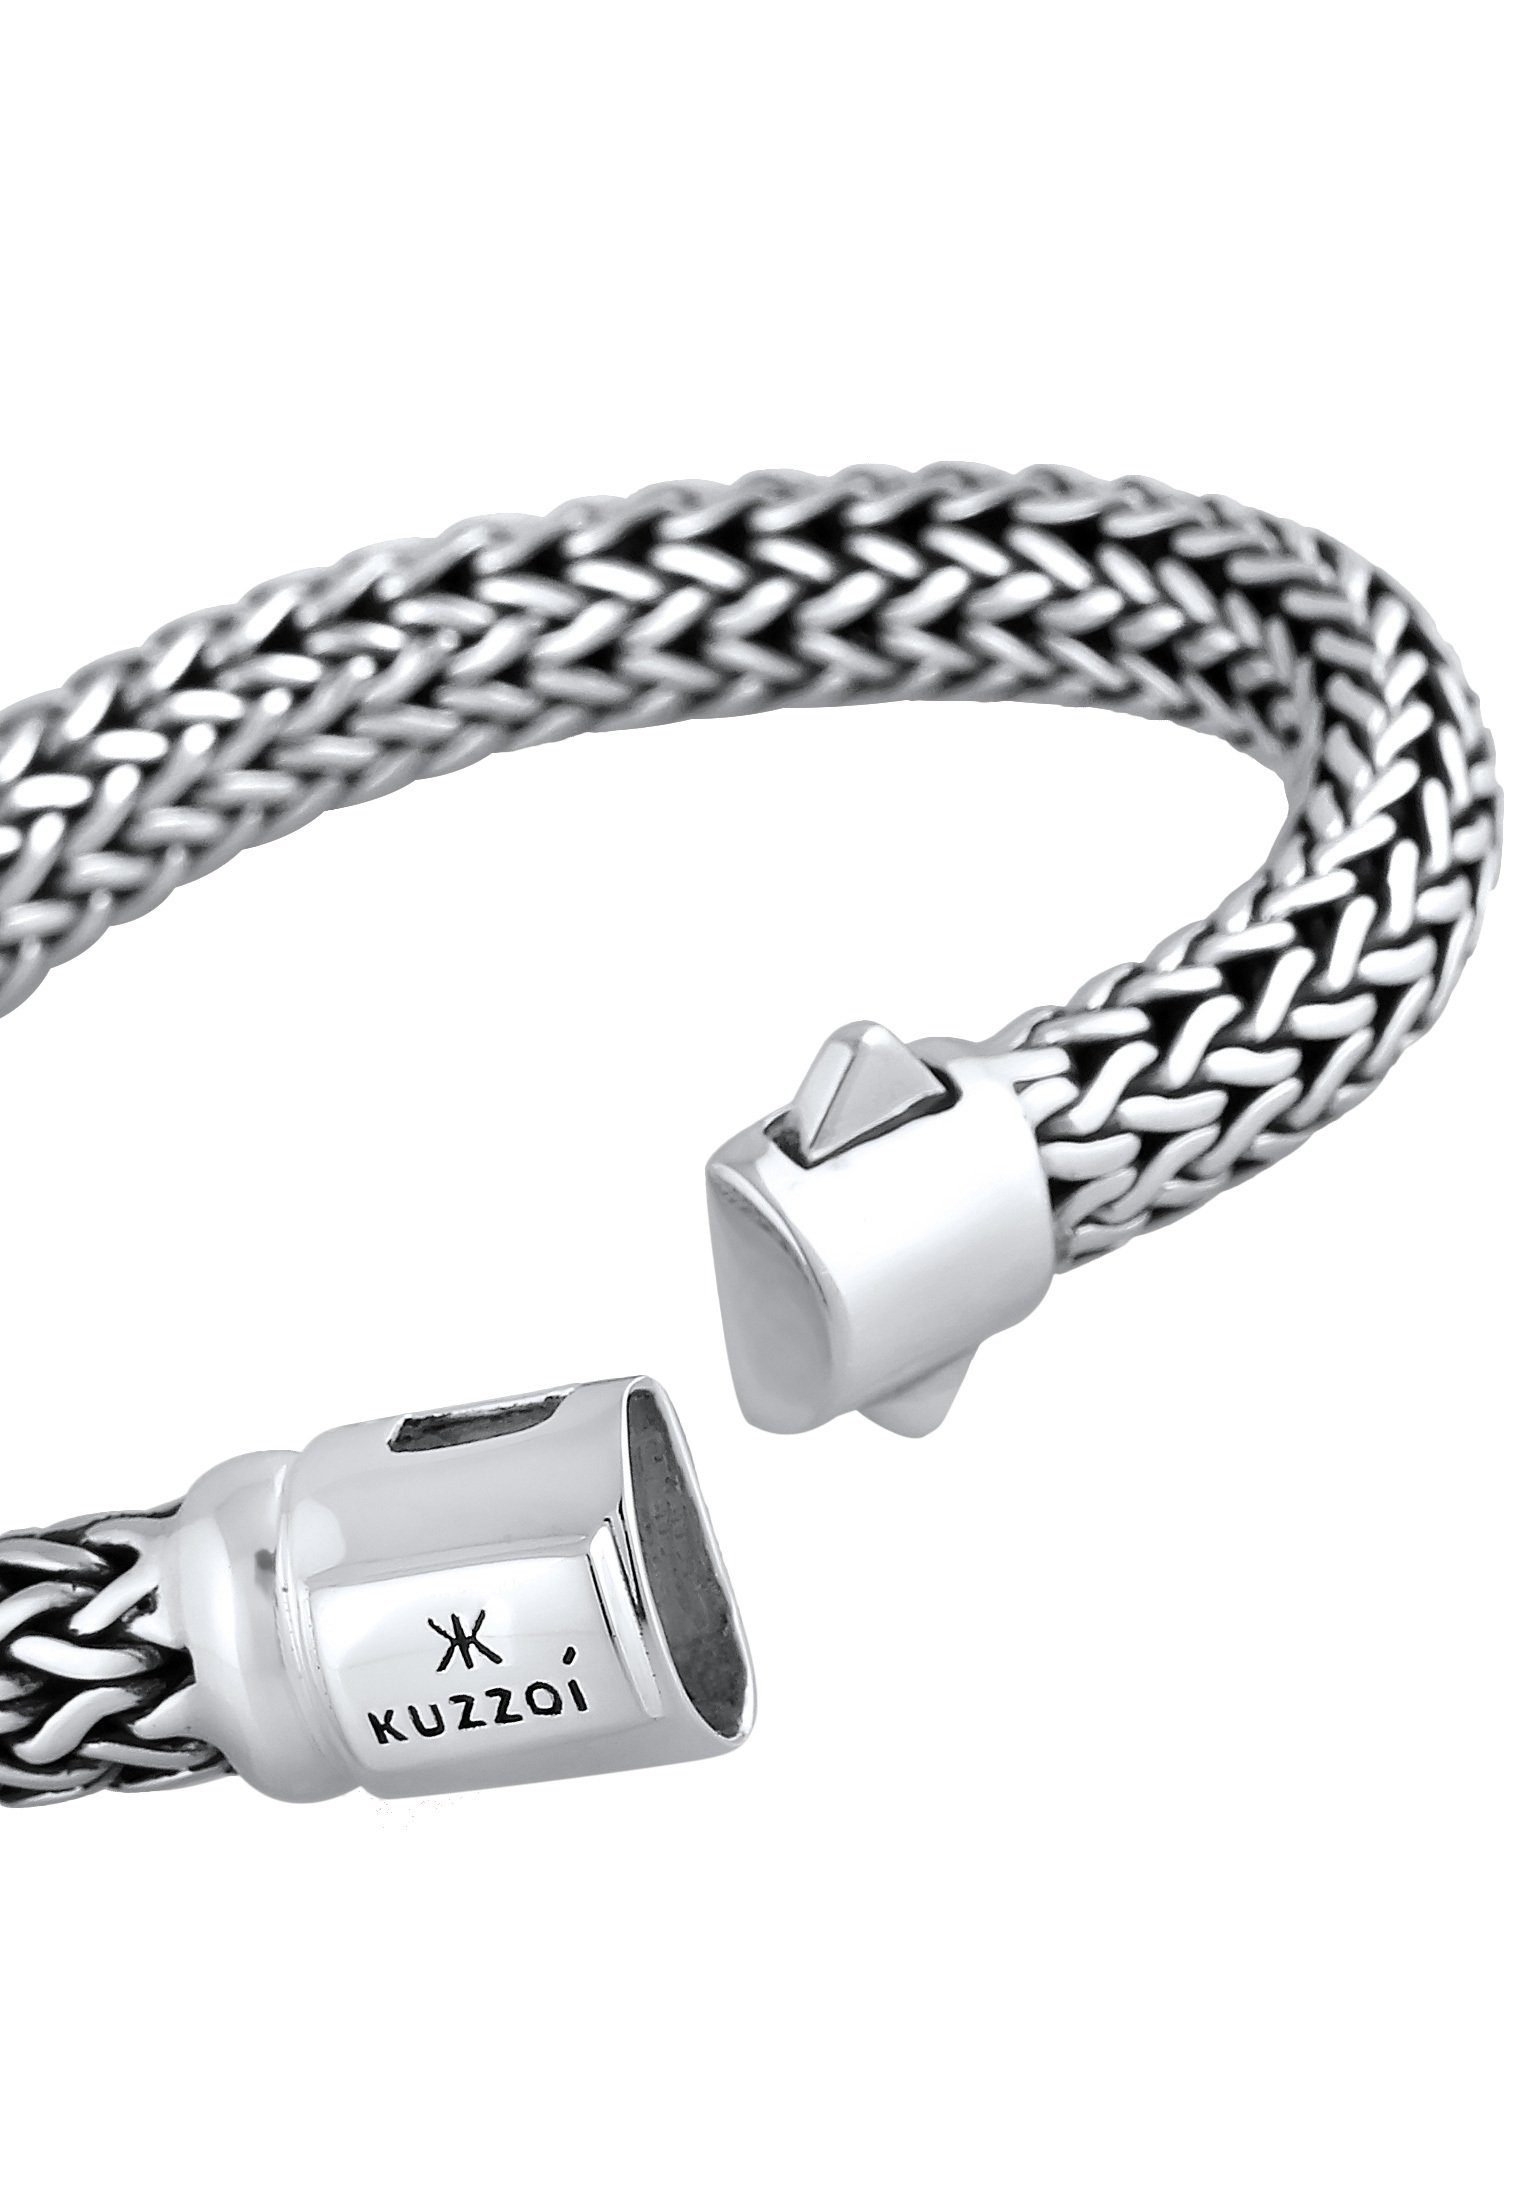 Gliederarmband Cool unisex Silber Basic 925 Kuzzoi Armband